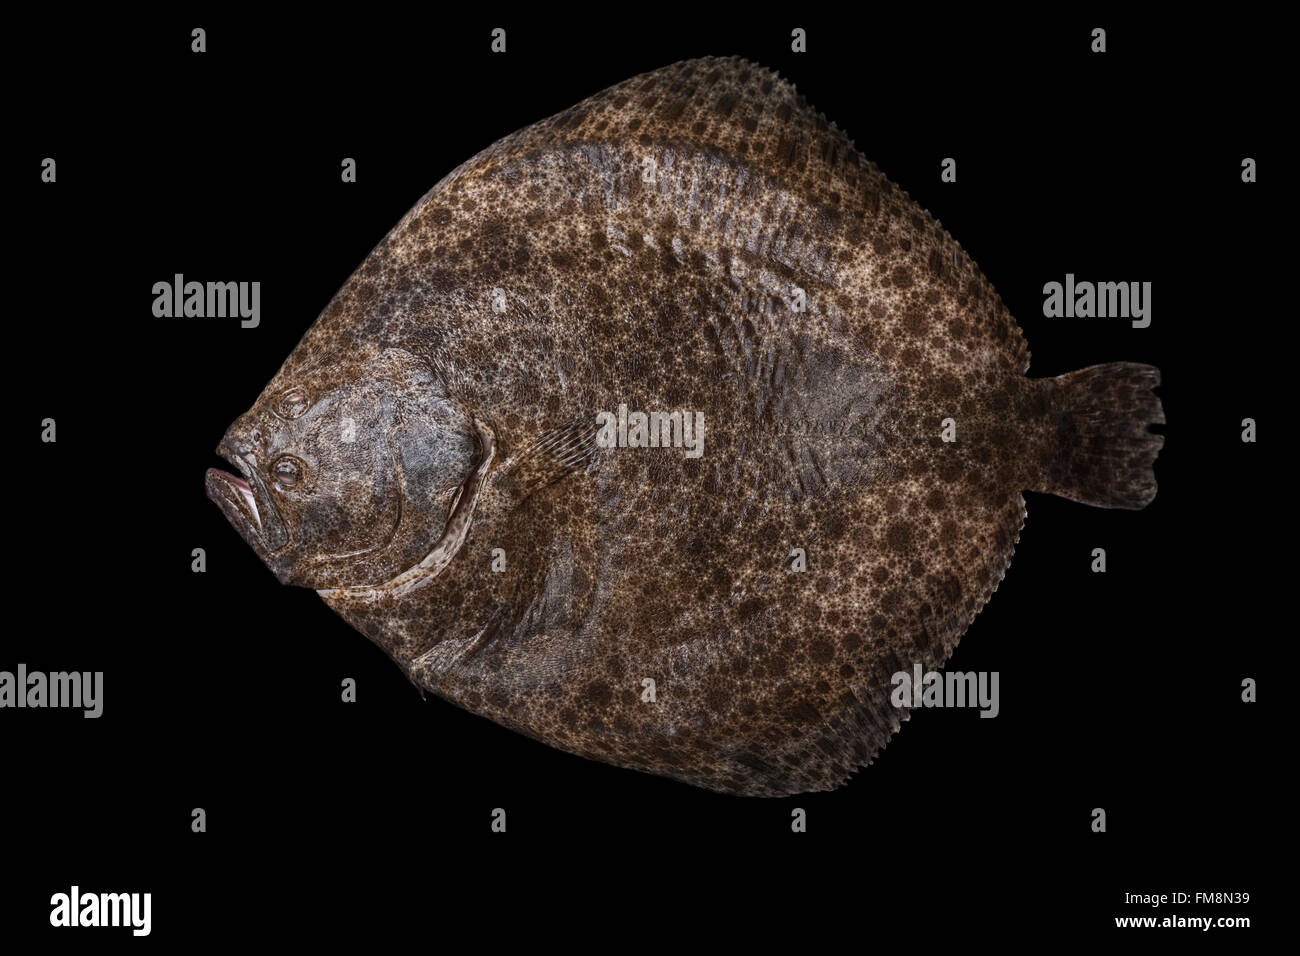 Whole fresh raw flatfish caught in the Alboran Sea in Spain, isolated on black background. Stock Photo